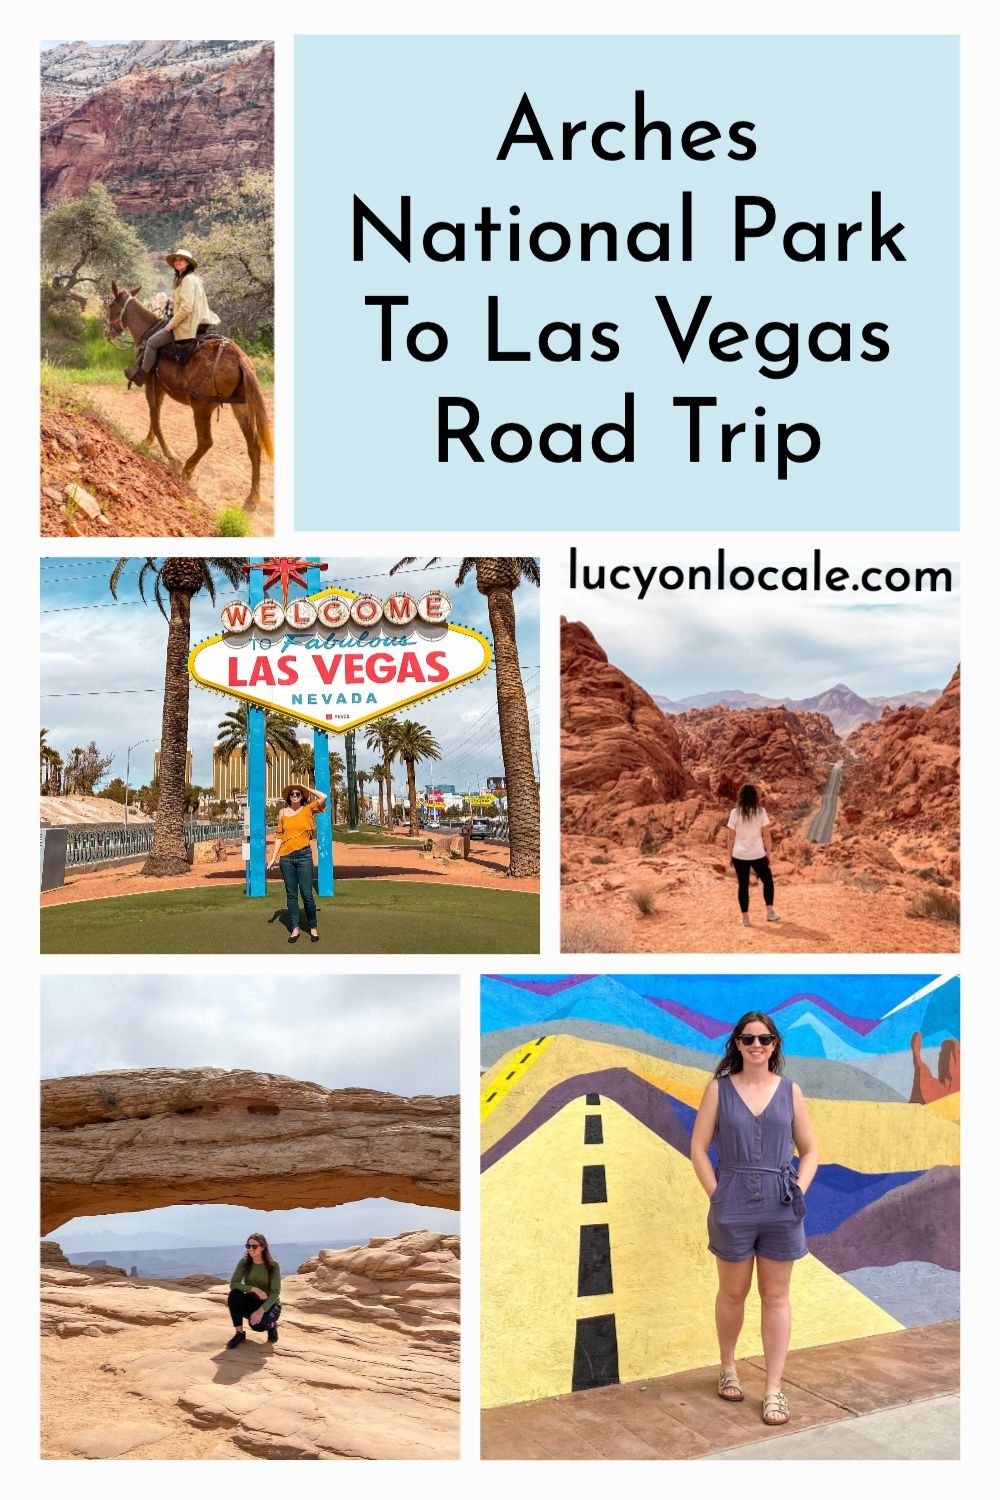 Arches National Park to Las Vegas road trip